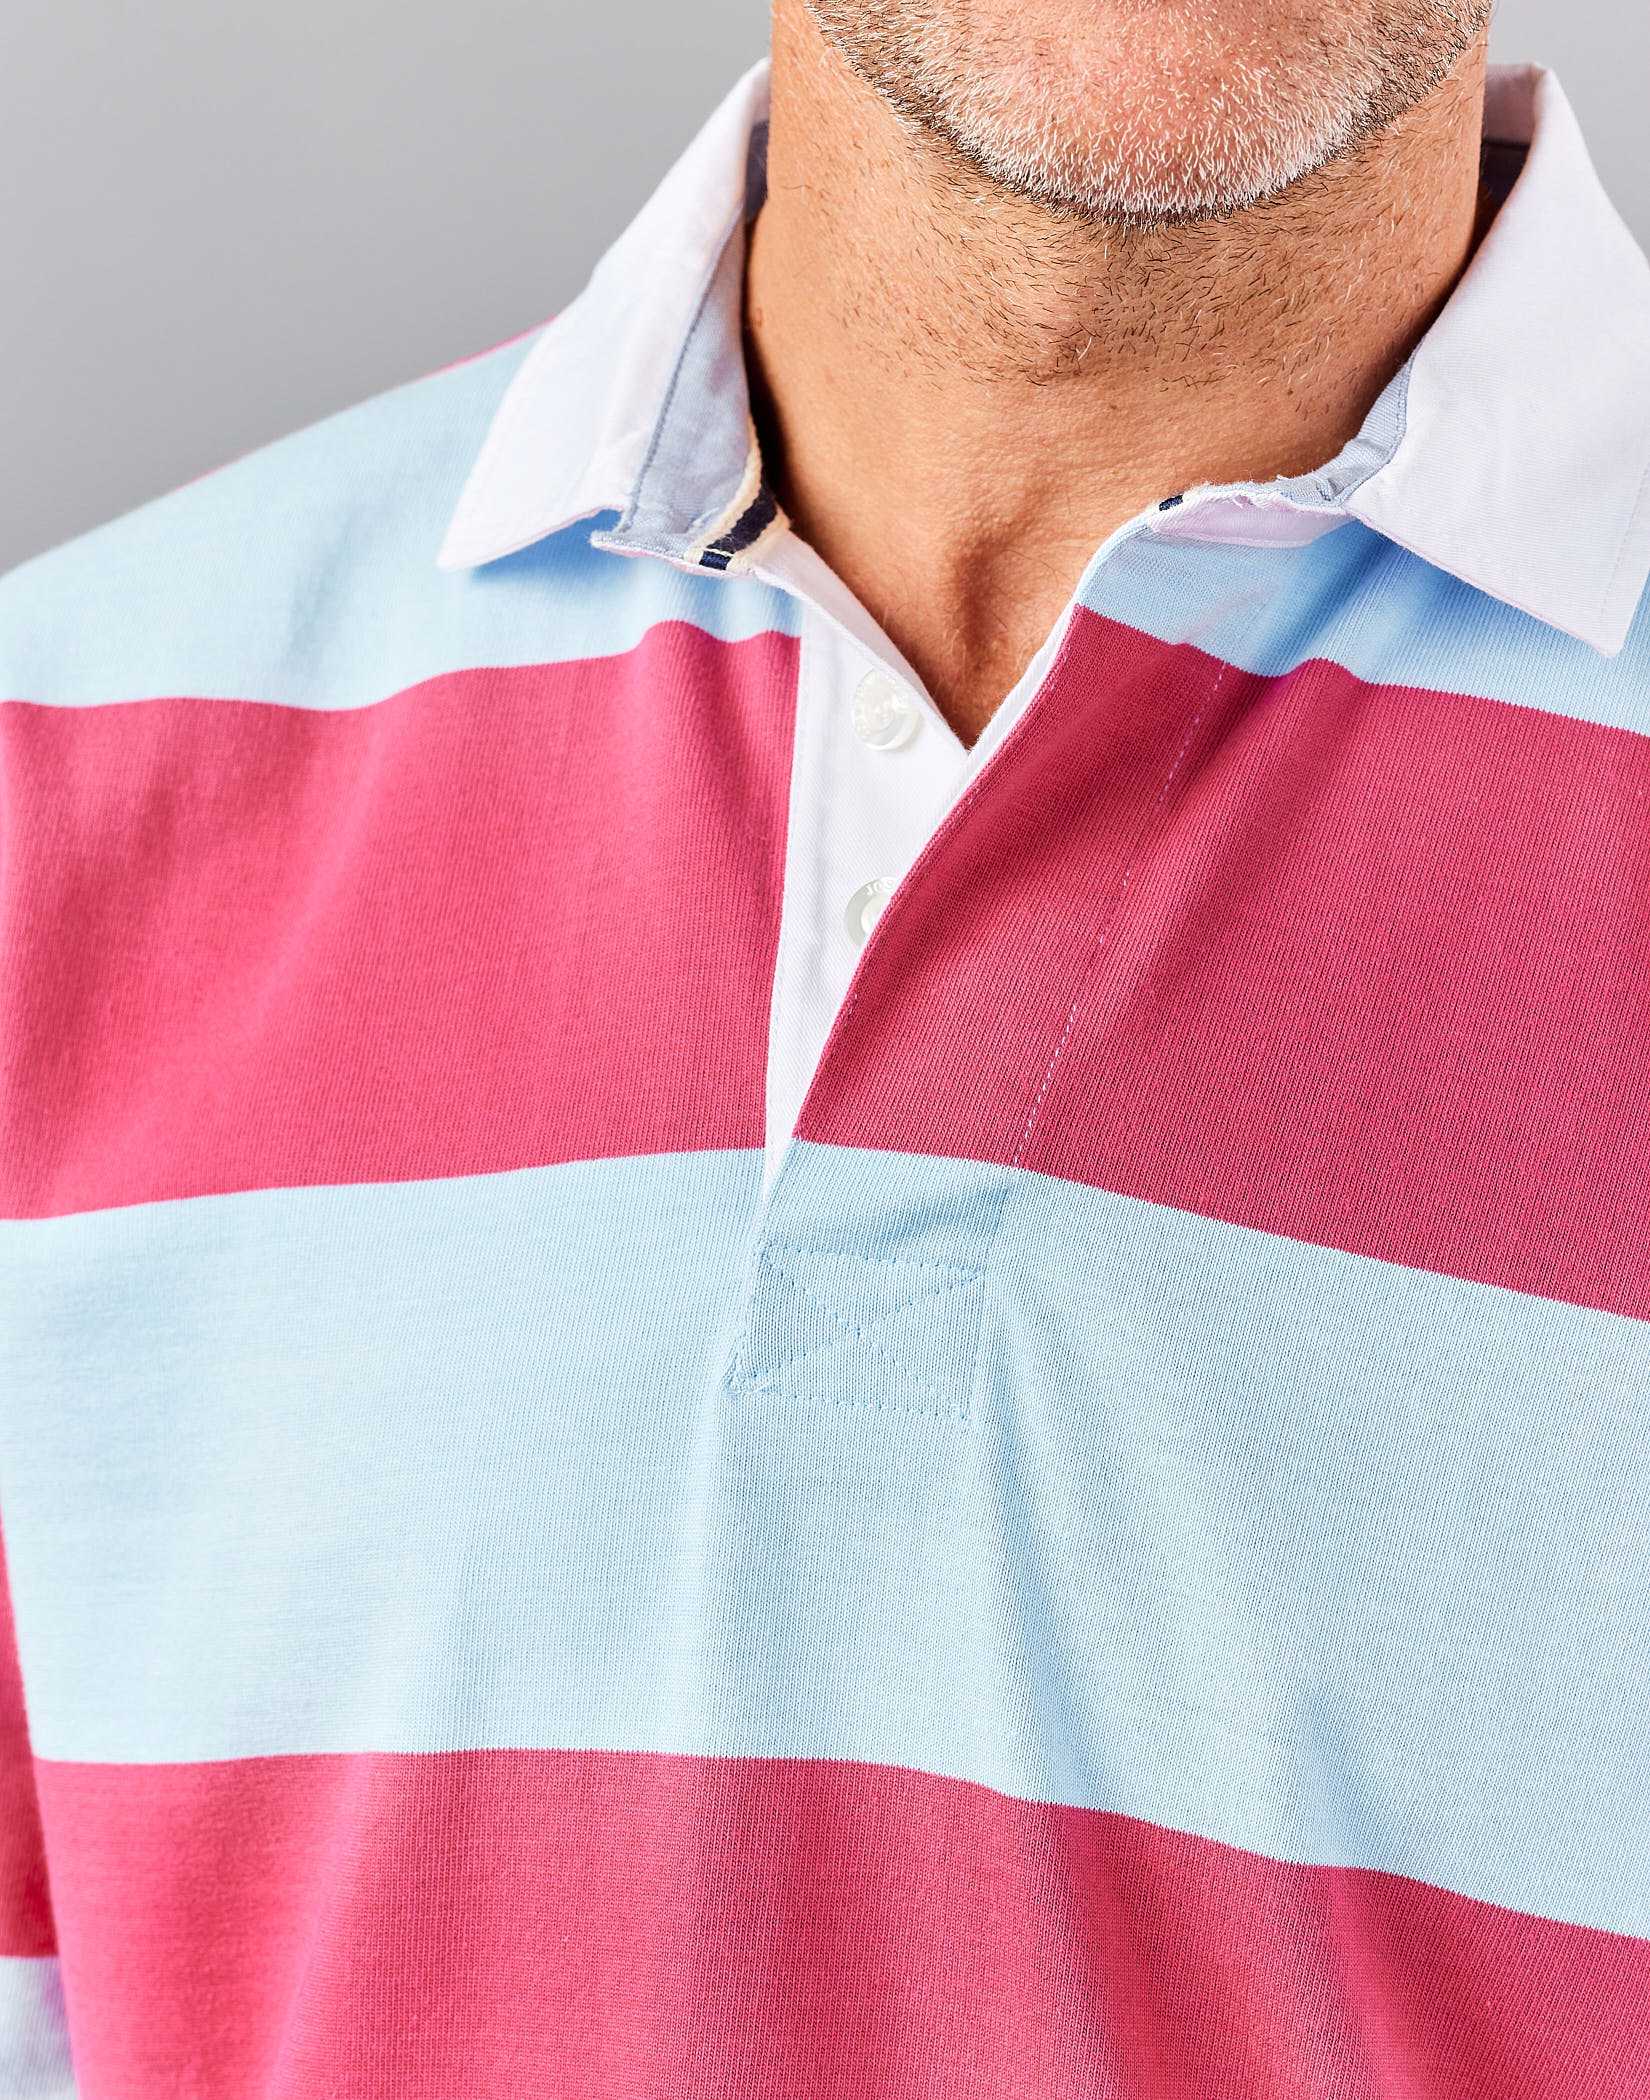 Rugby Shirt - Pink/Blue